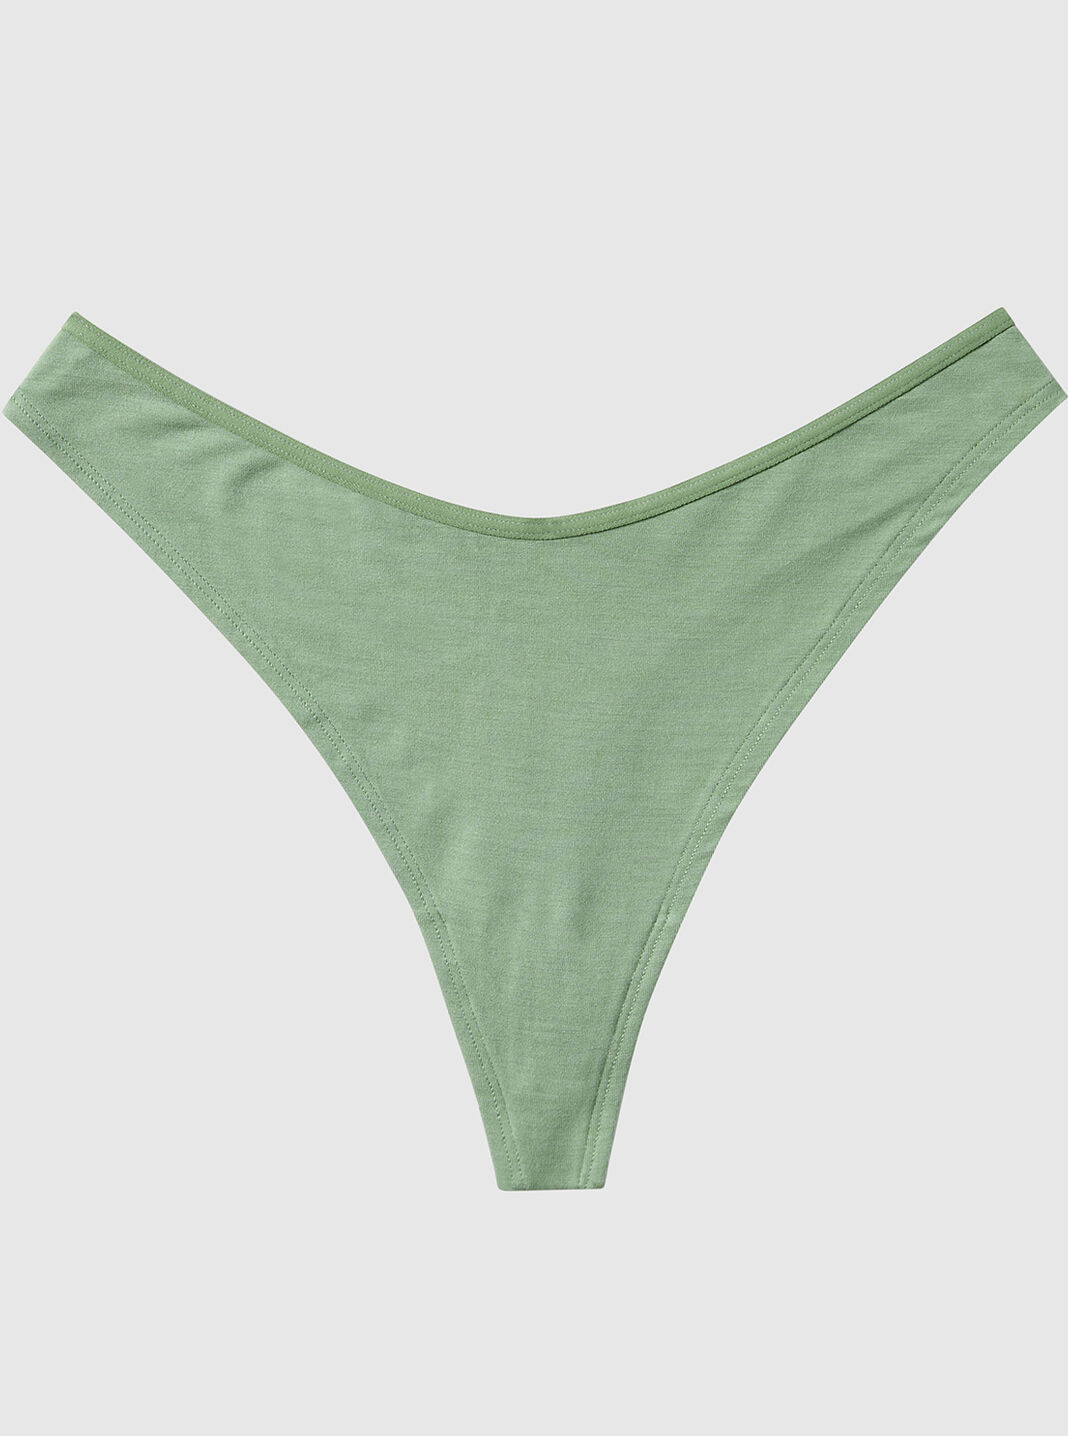 LAST CLANCE SALE! Women Underwear High Waist Cotton Briefs Ladies Panties  Tummy Control Panty Full Coverage Multipack, Green, XL 